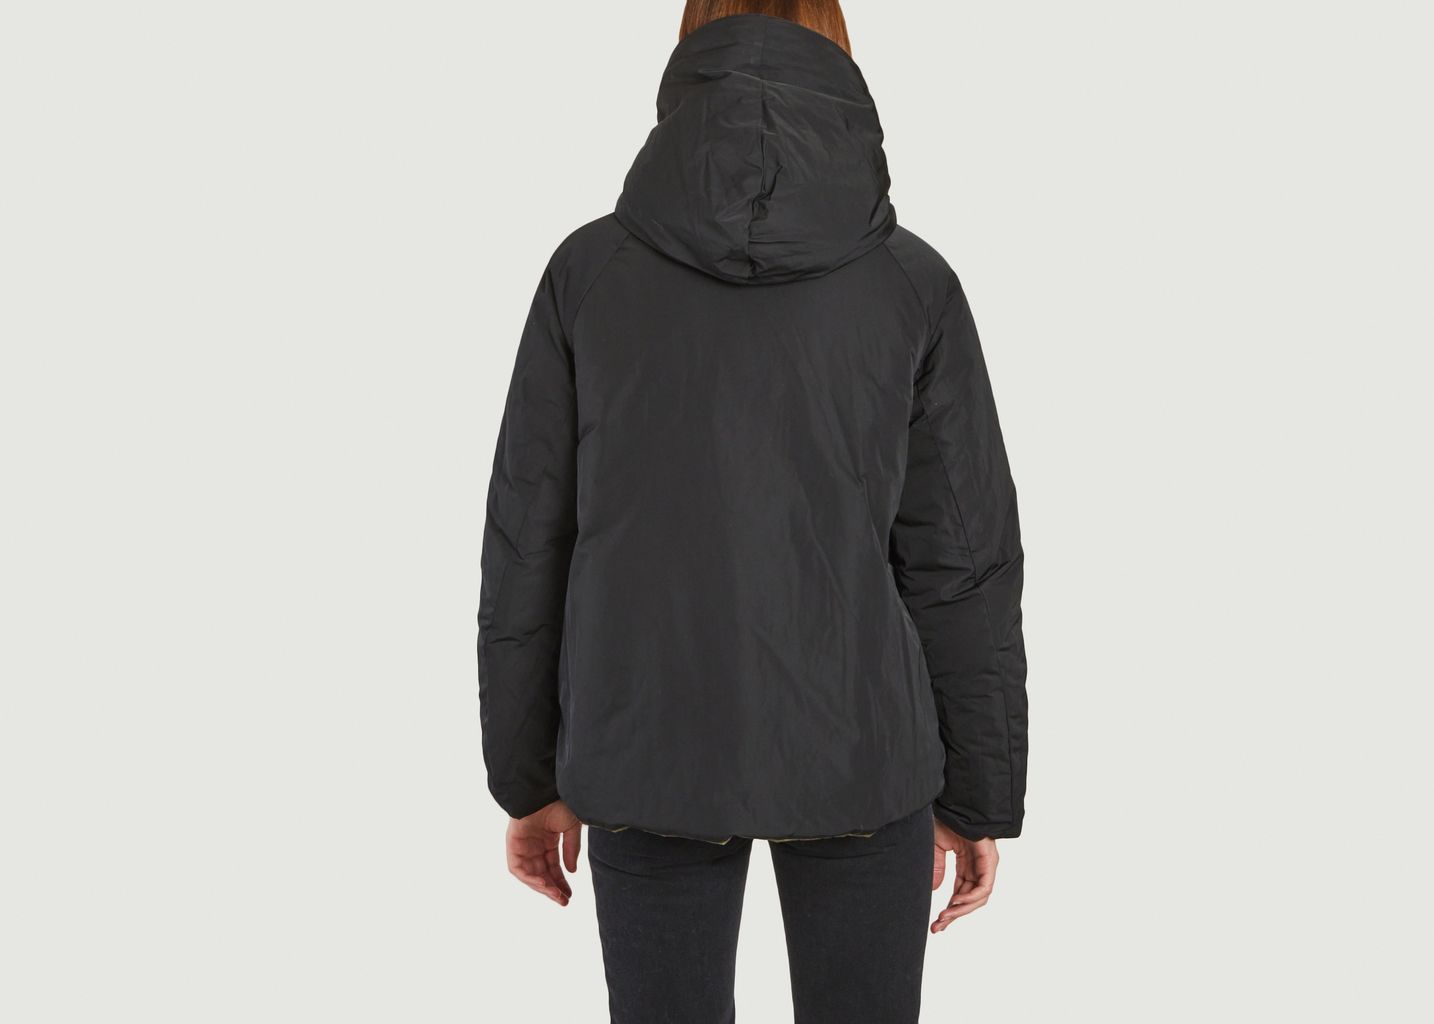  Reversible 9006 nylon jacket - OOF WEAR